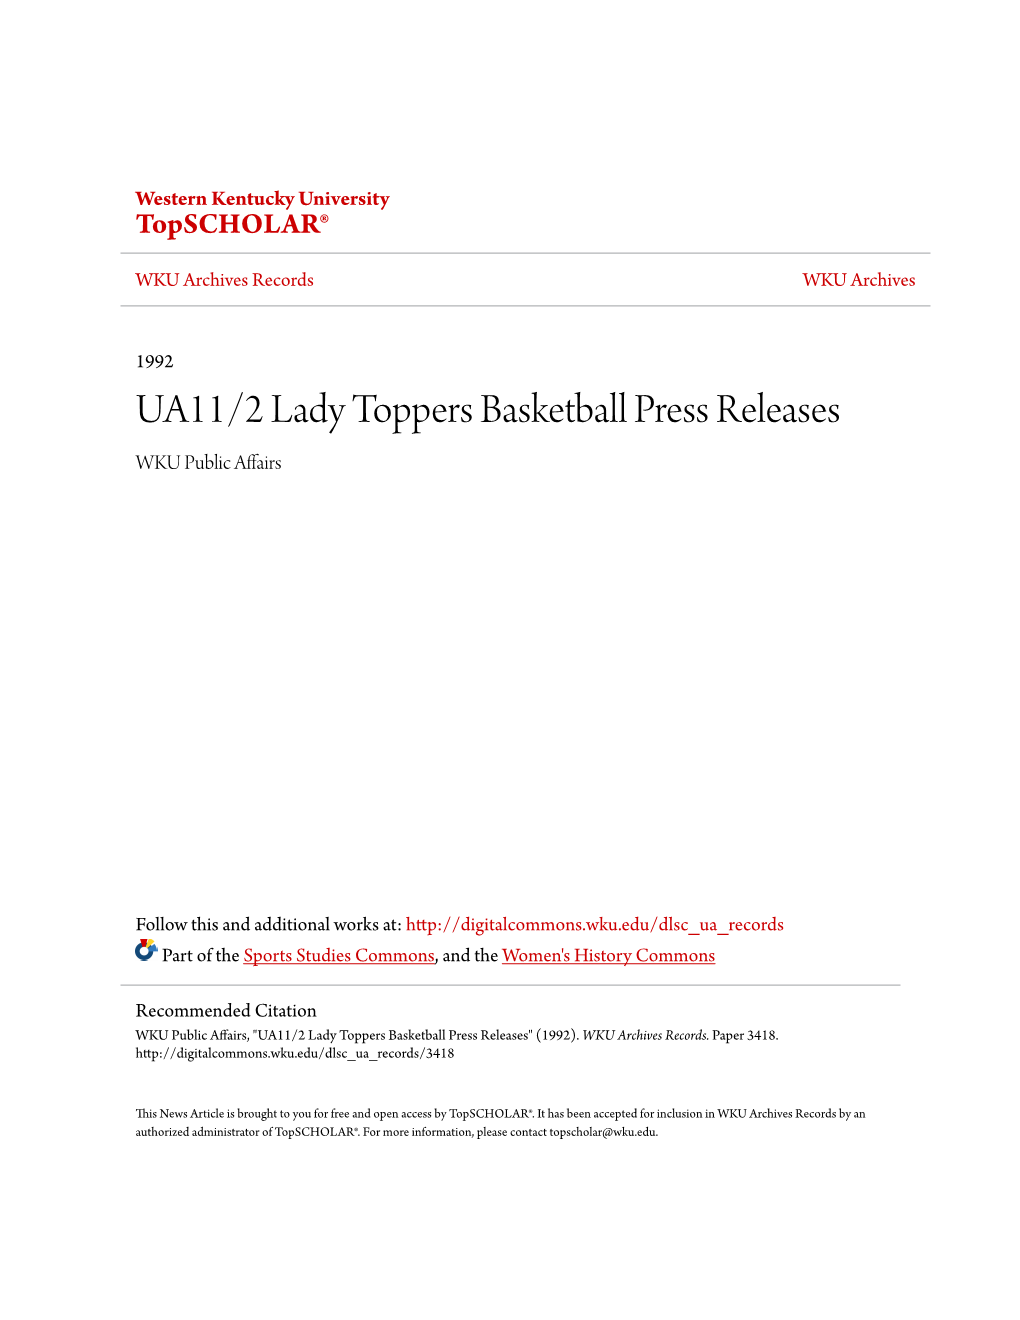 UA11/2 Lady Toppers Basketball Press Releases WKU Public Affairs